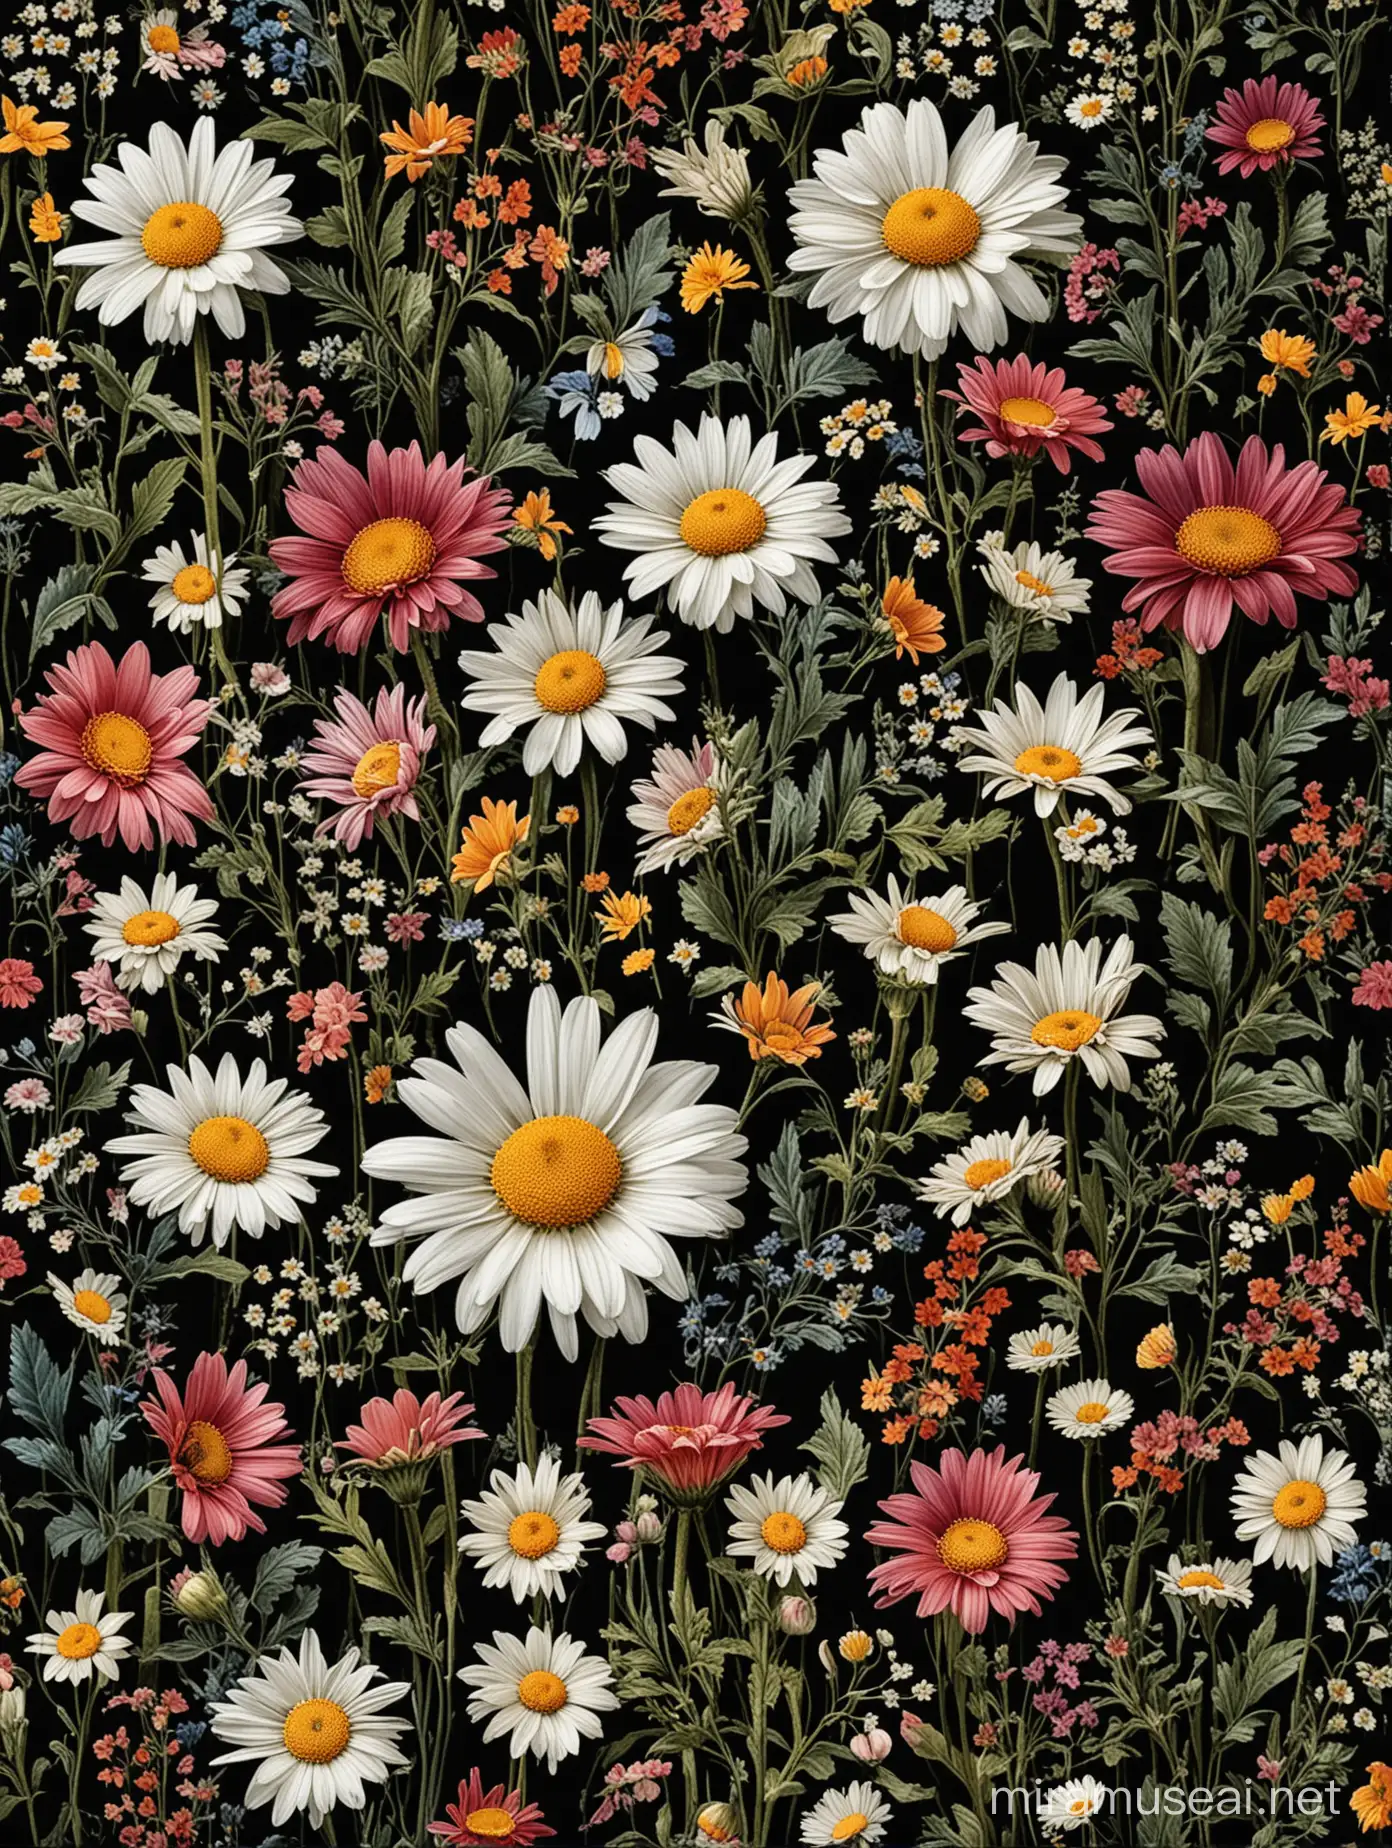 Vibrant MultiColored Daisy Blossom in Stylish Decorative Setting on Black Background